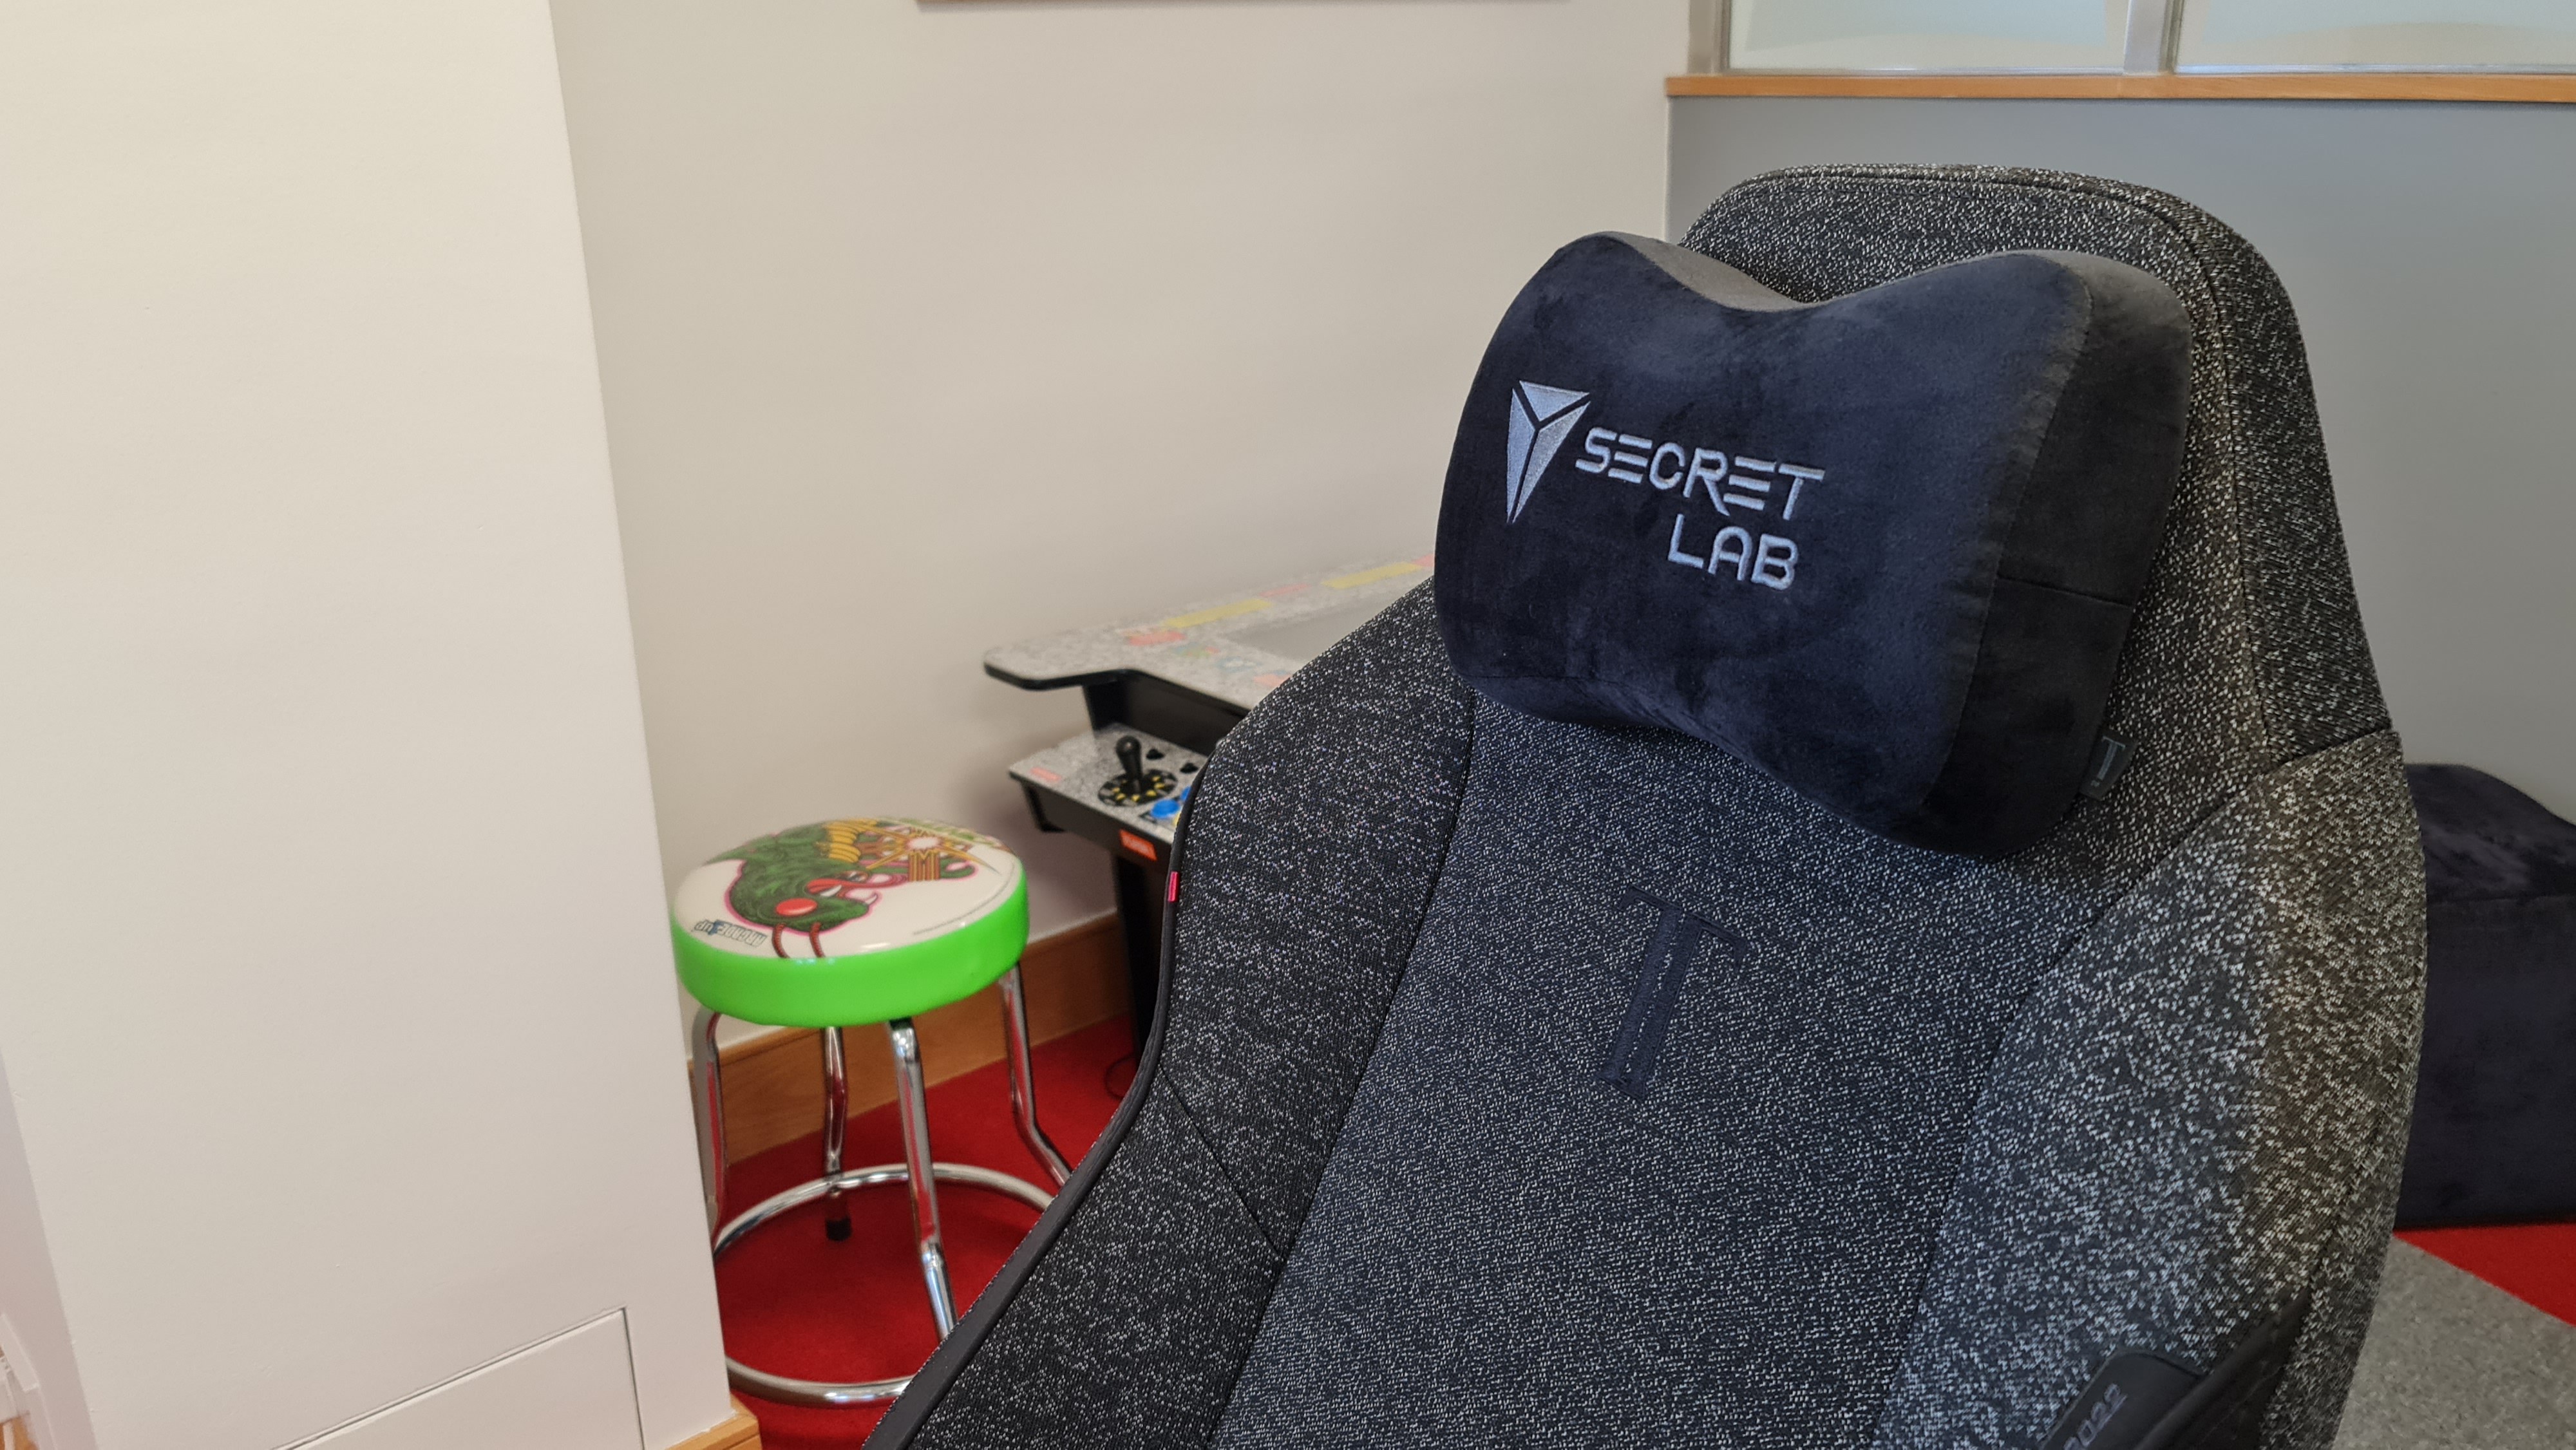 Review: I Tried Secretlab's TITAN Evo 2022 Gaming Chair